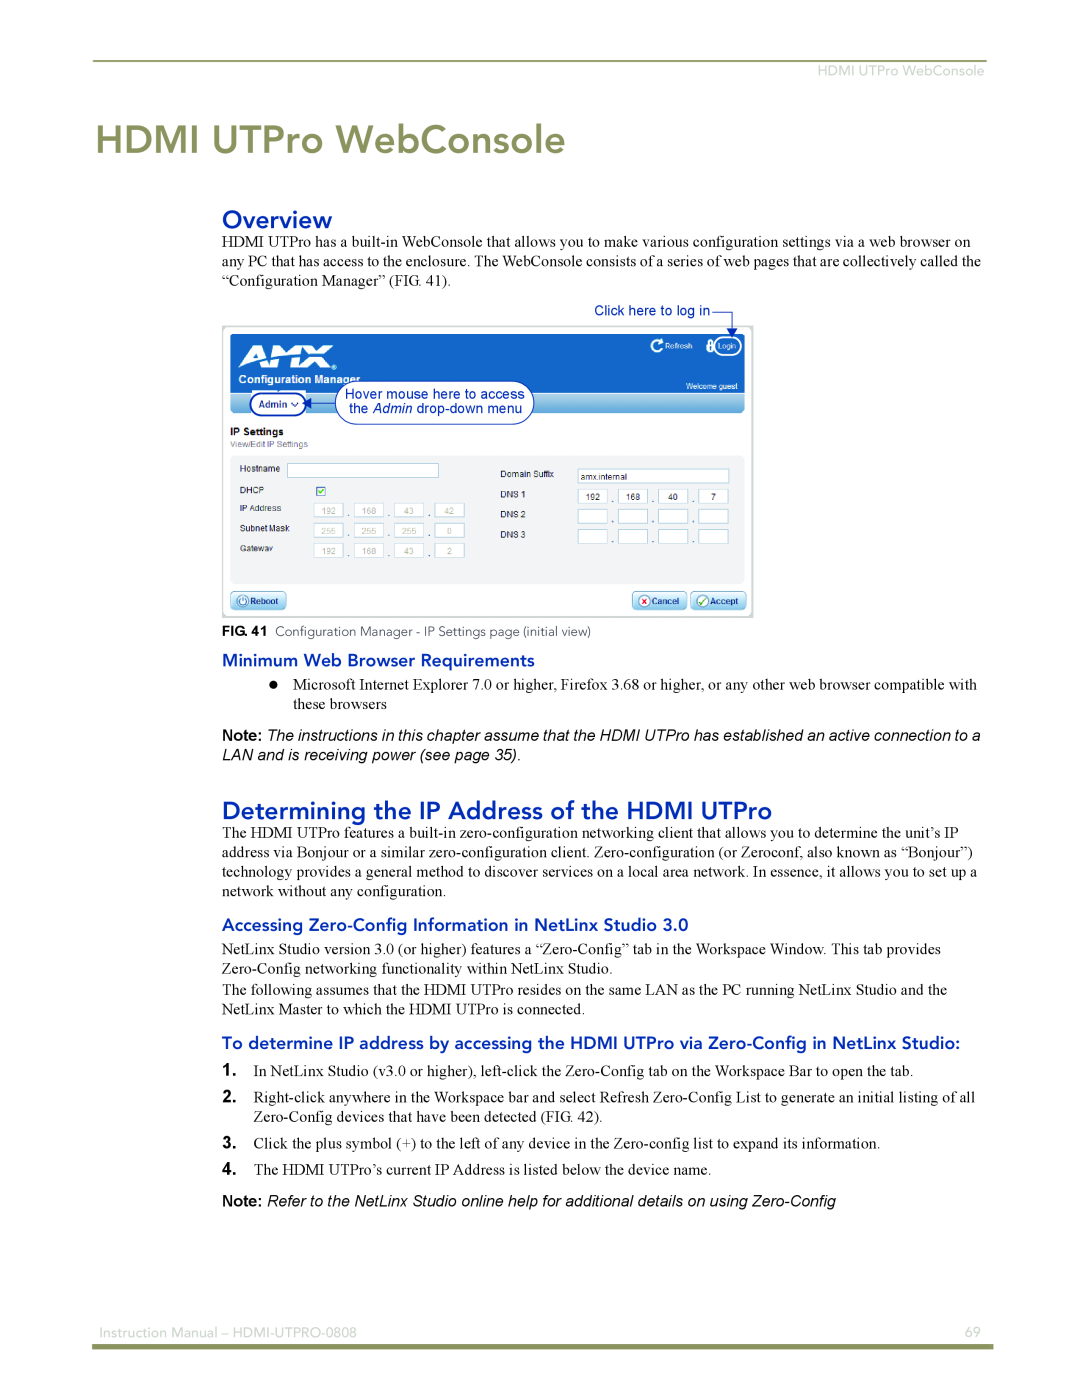 AMX HDMI-UTPRO-0808 instruction manual HDMI UTPro WebConsole, Overview, Determining the IP Address of the HDMI UTPro 